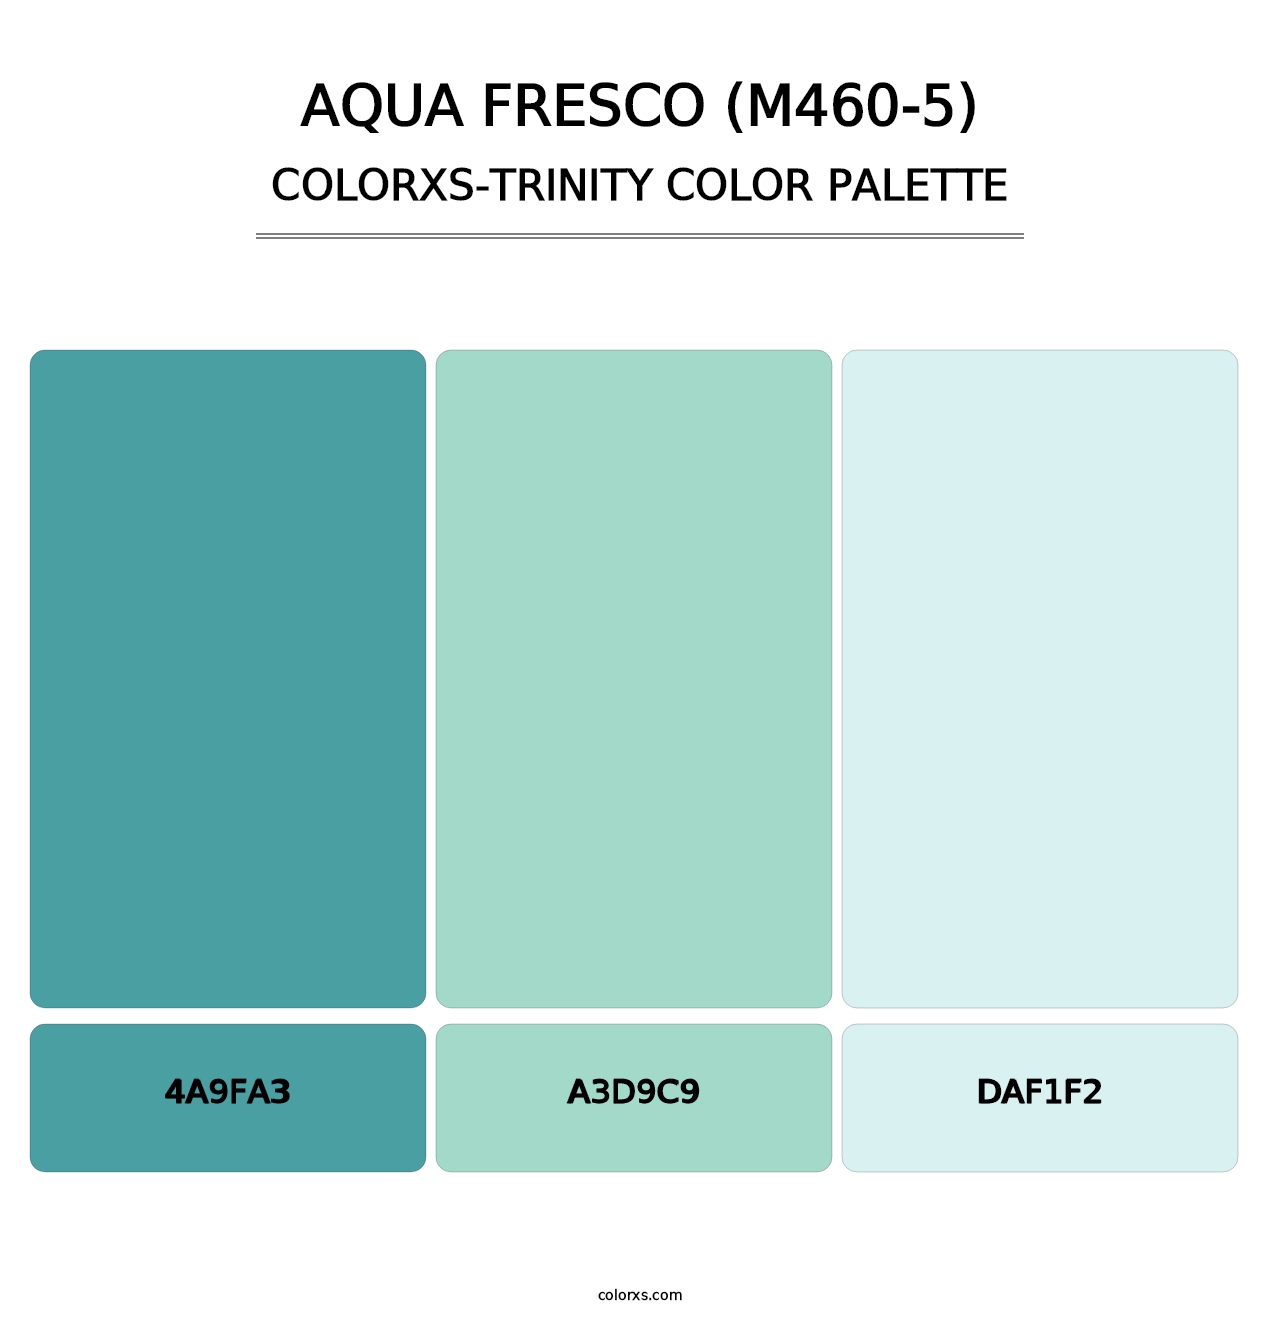 Aqua Fresco (M460-5) - Colorxs Trinity Palette